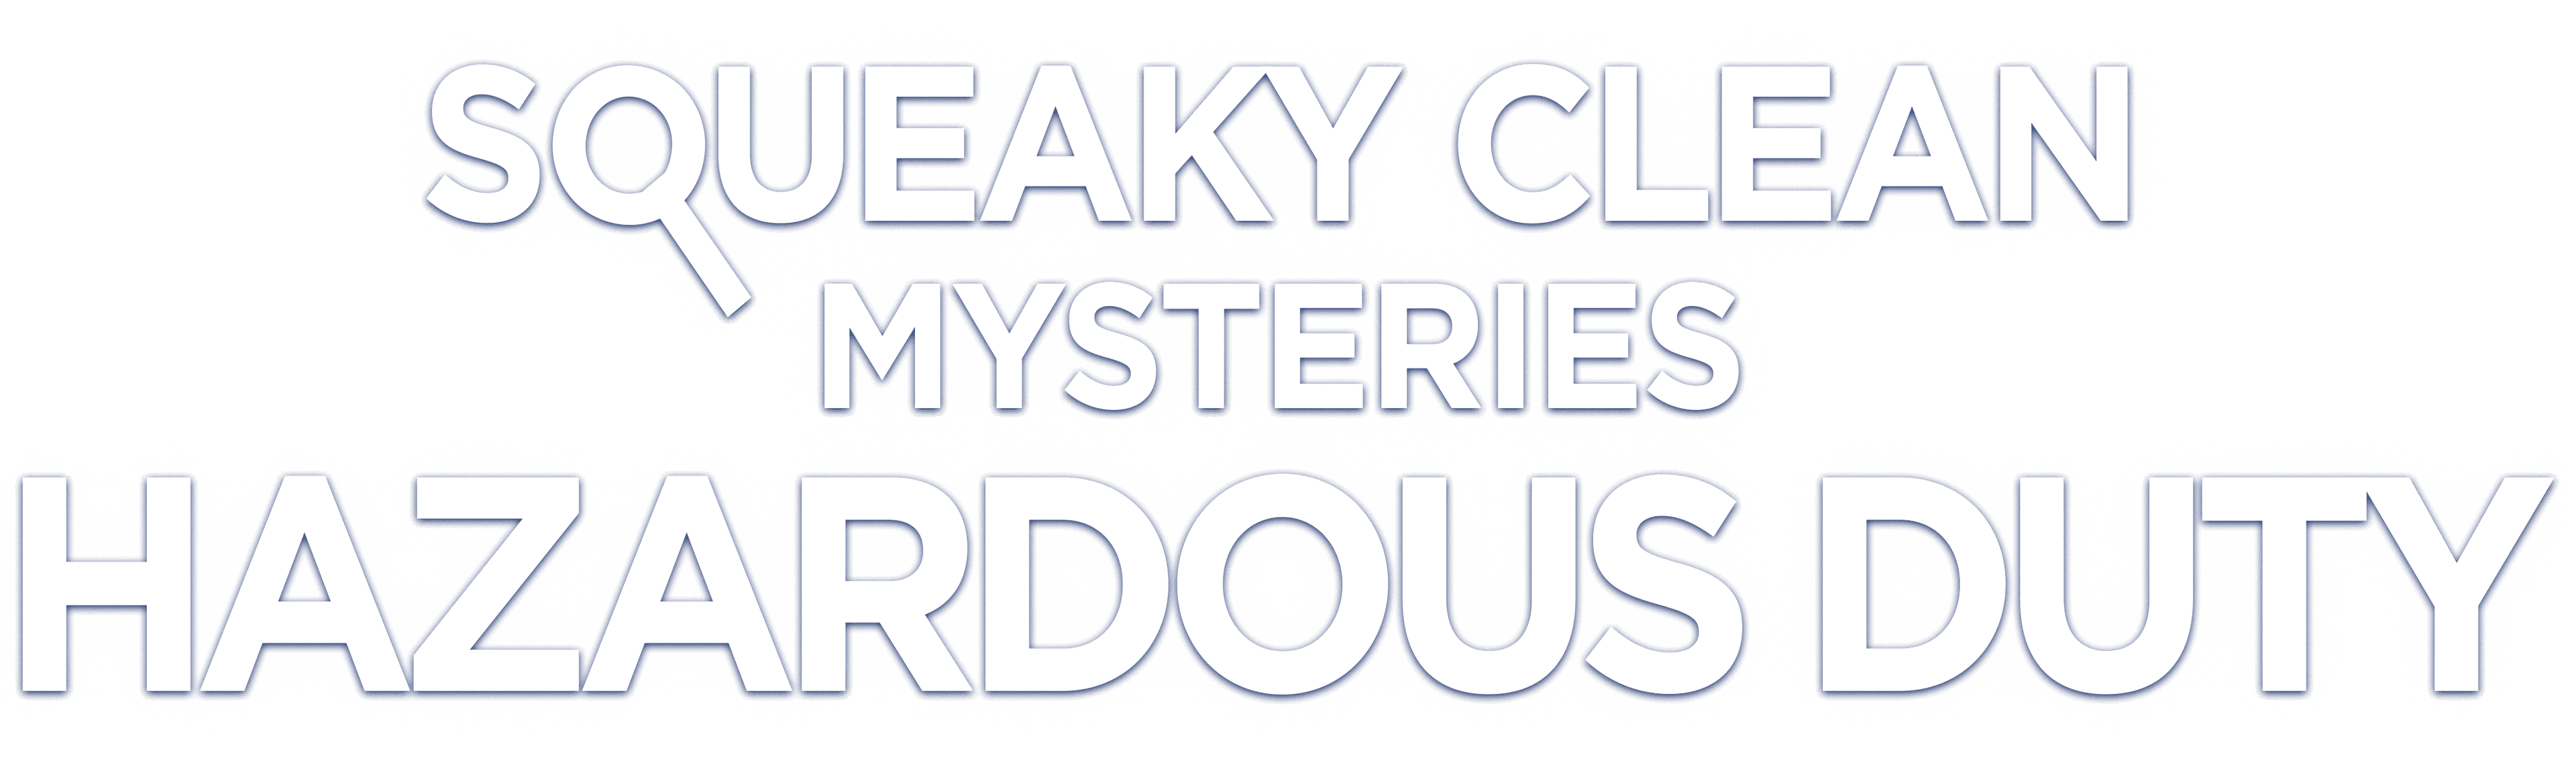 Squeaky Clean Mysteries: Hazardous Duty logo